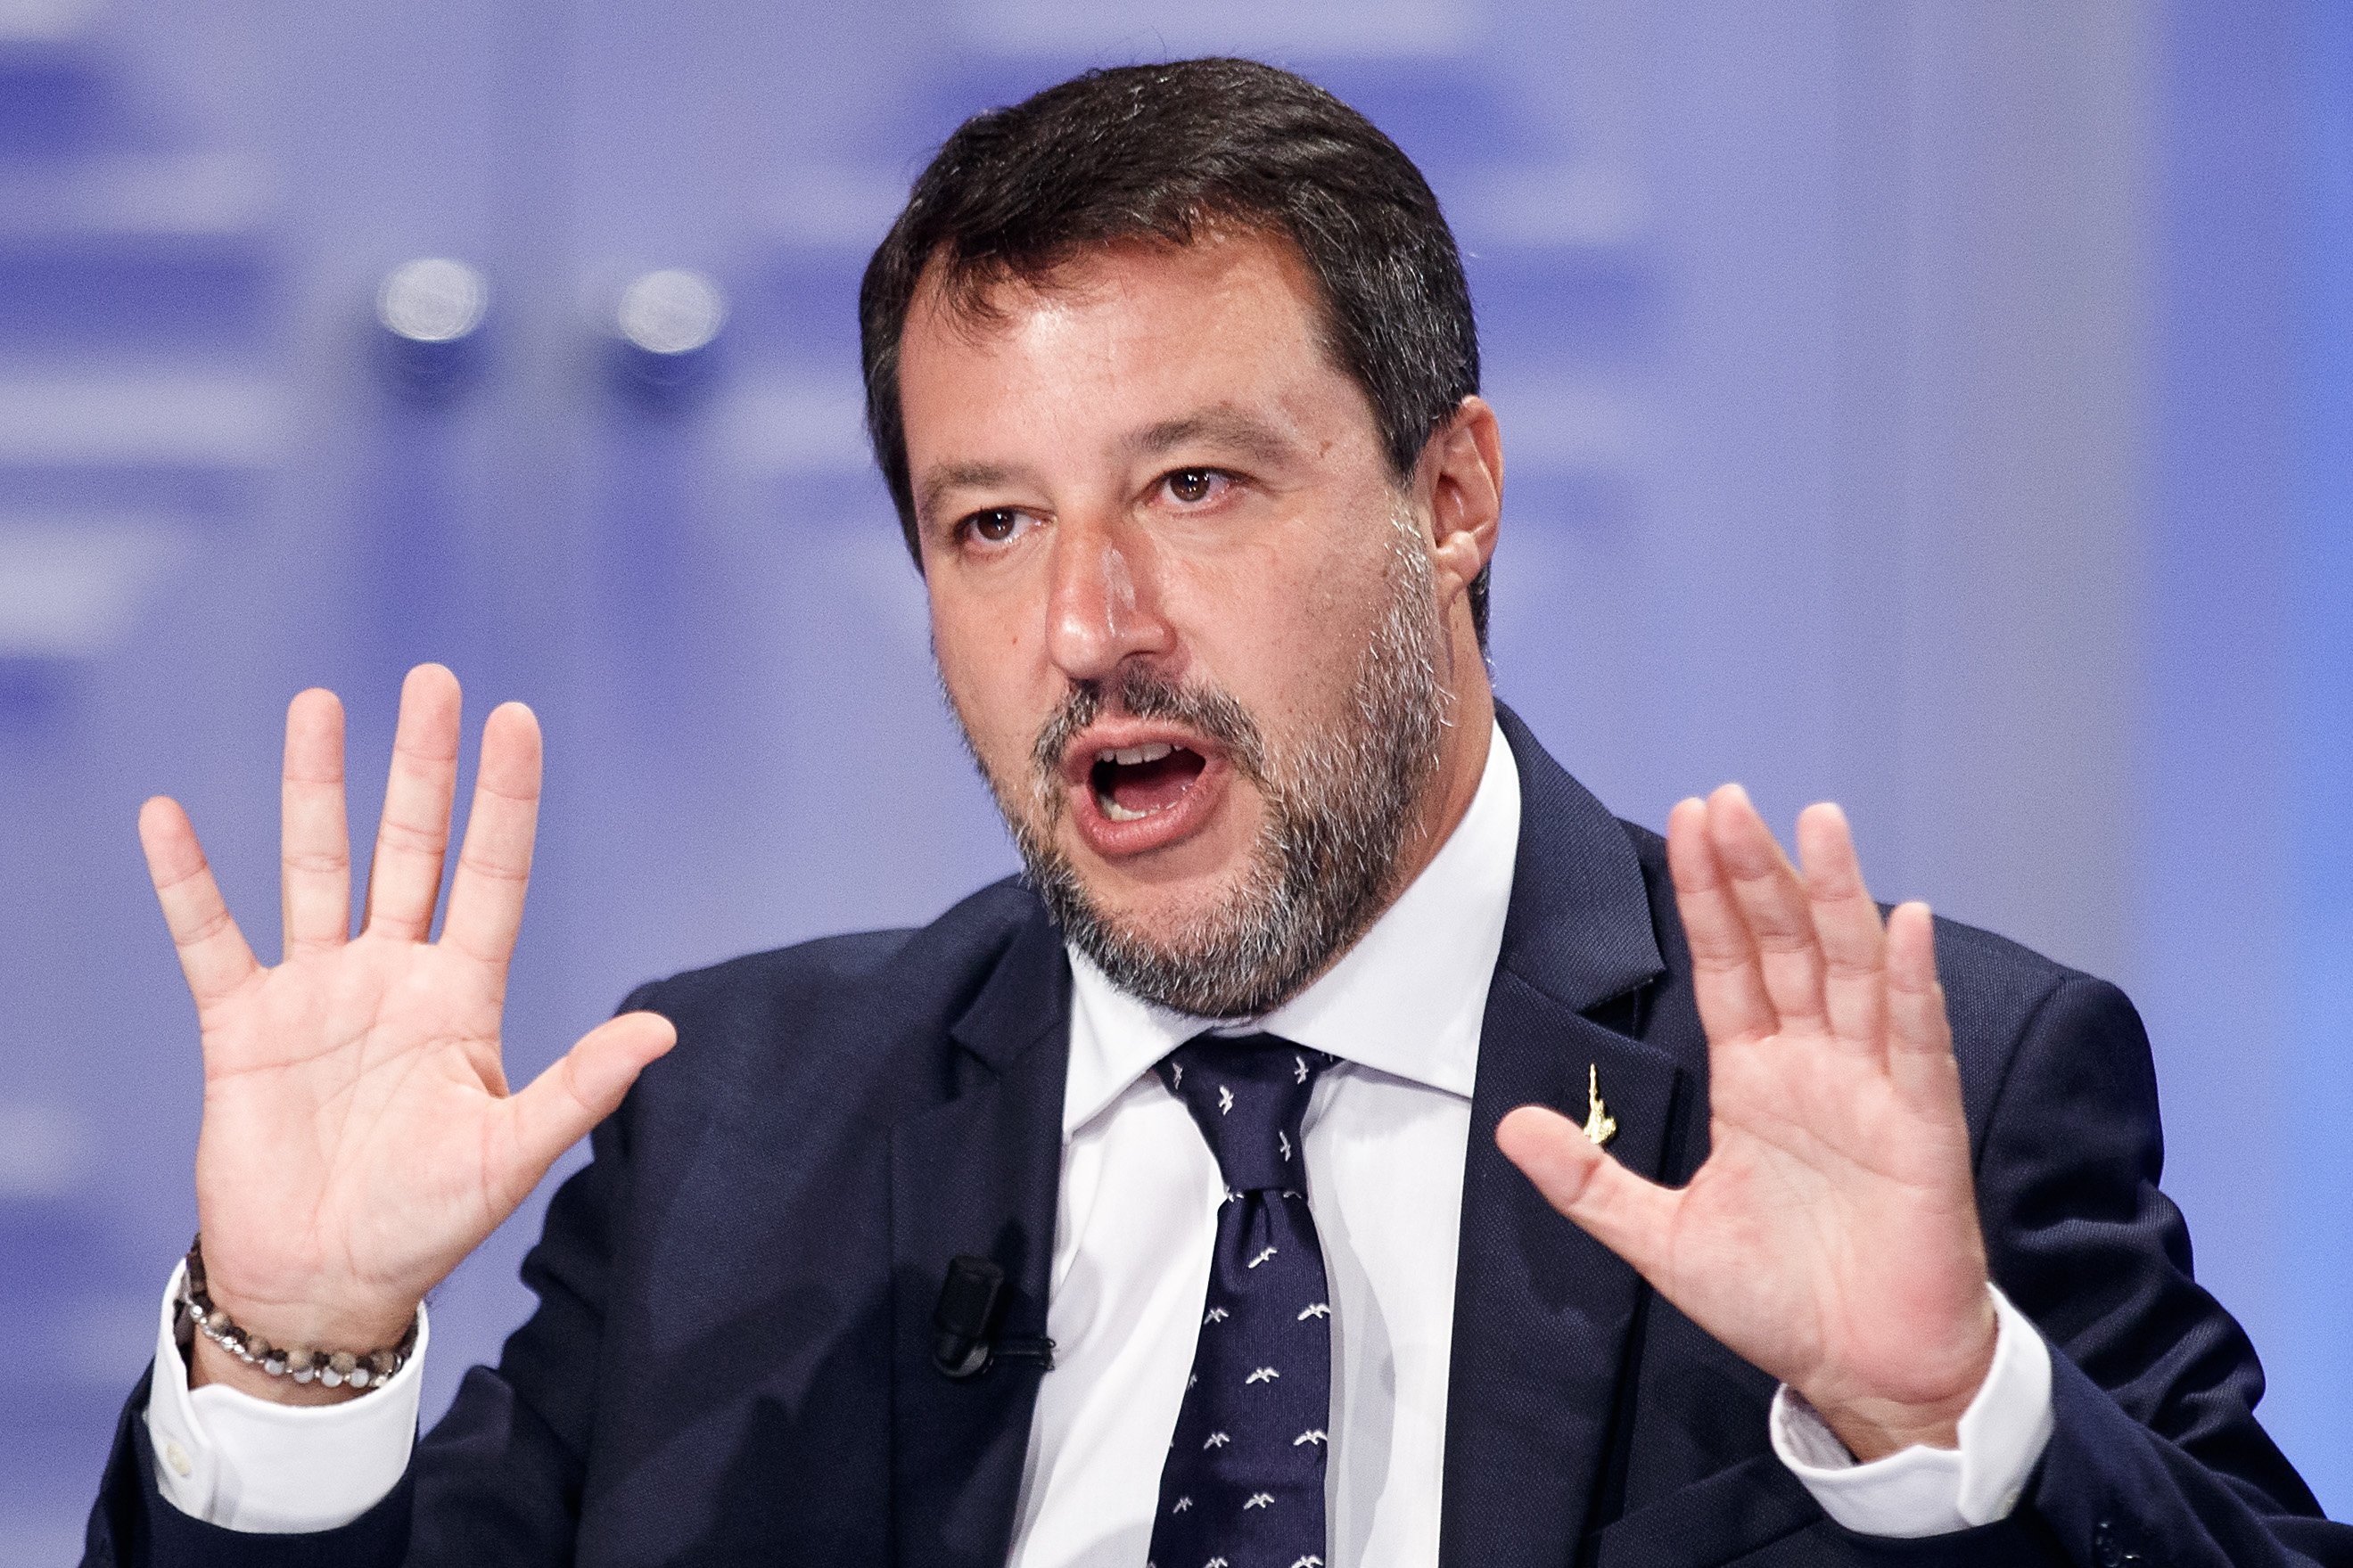 Salvini quiere que Italia no sea "protagonista" de la "venganza" a Puigdemont